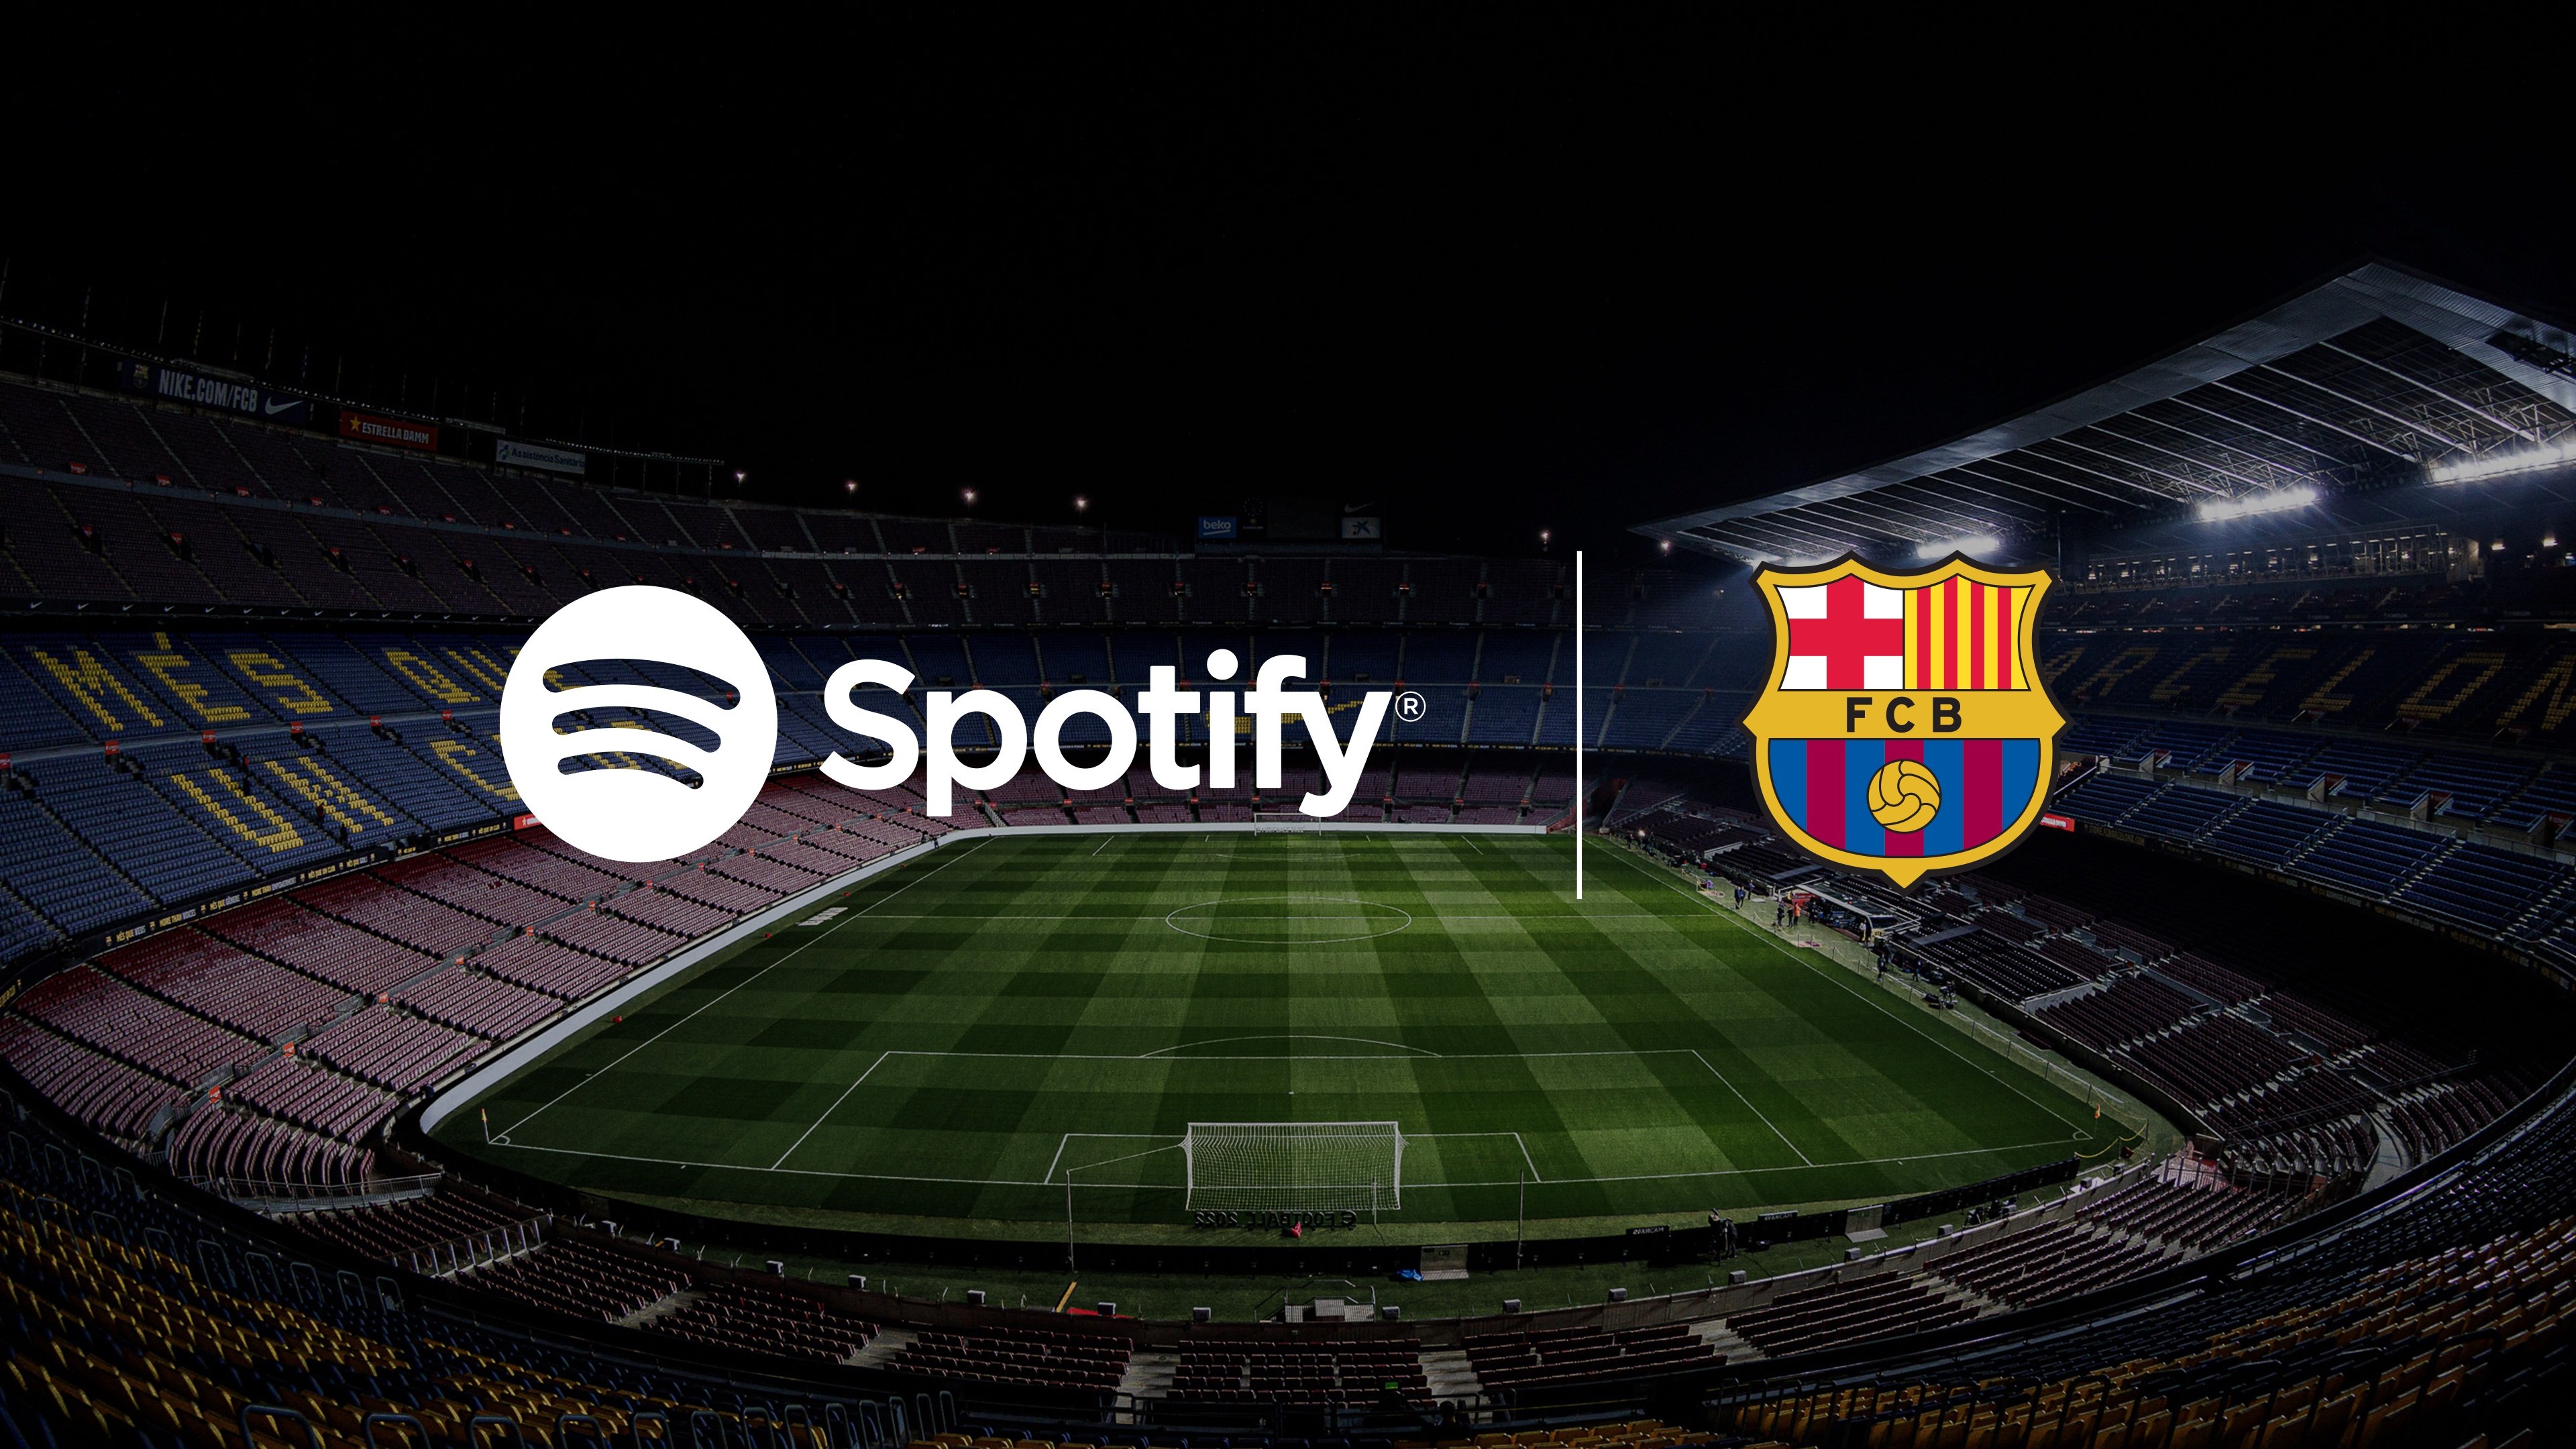 Spotify Barca FC Barcelona